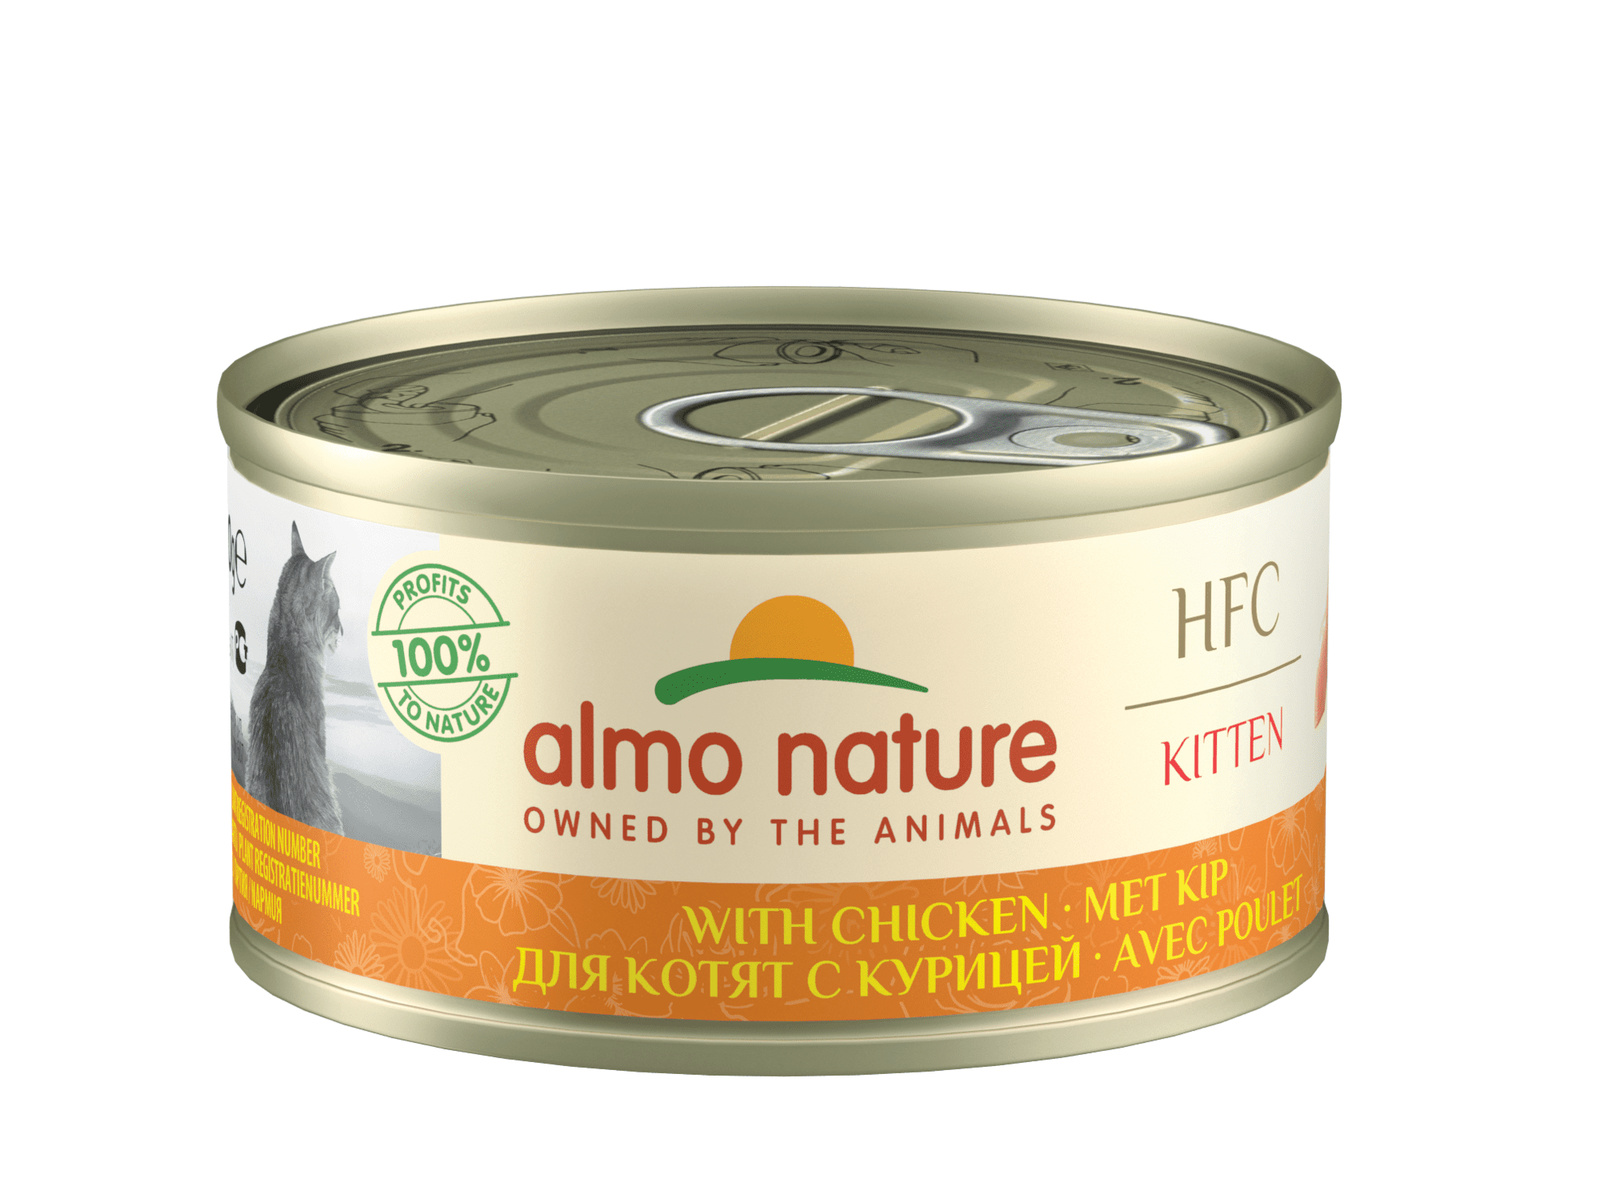 Almo Nature консервы Almo Nature консервы для котят, с курицей (70 г) almo nature консервы almo nature консервы паучи для котят с курицей 55 г